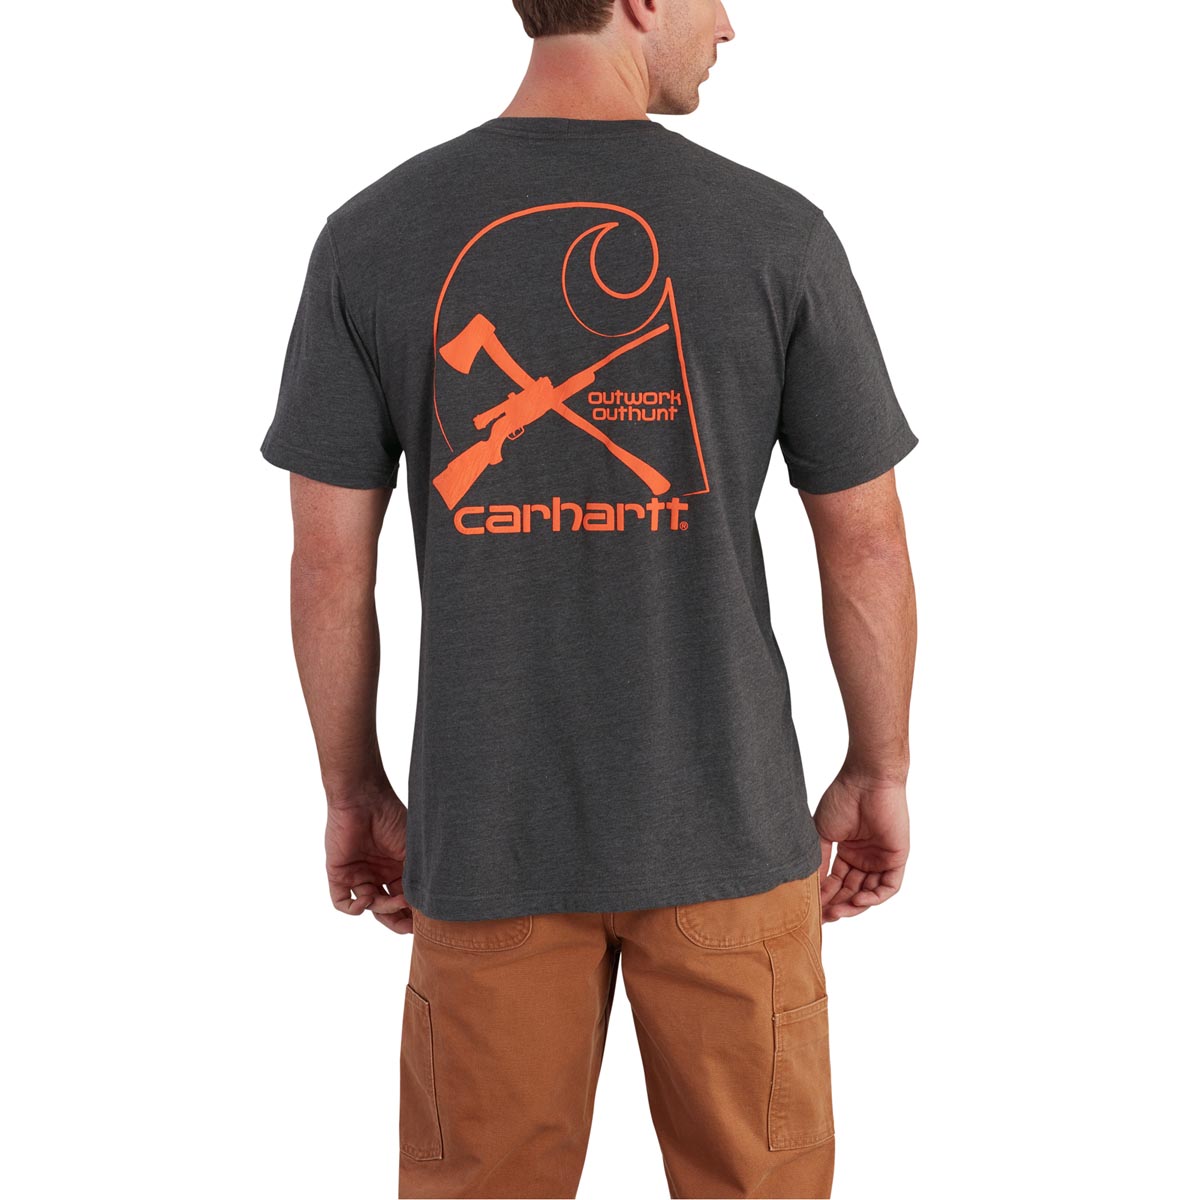 Carhartt Men's Maddock Graphic Rugged Outdoors Branded C Pocket T Shirt